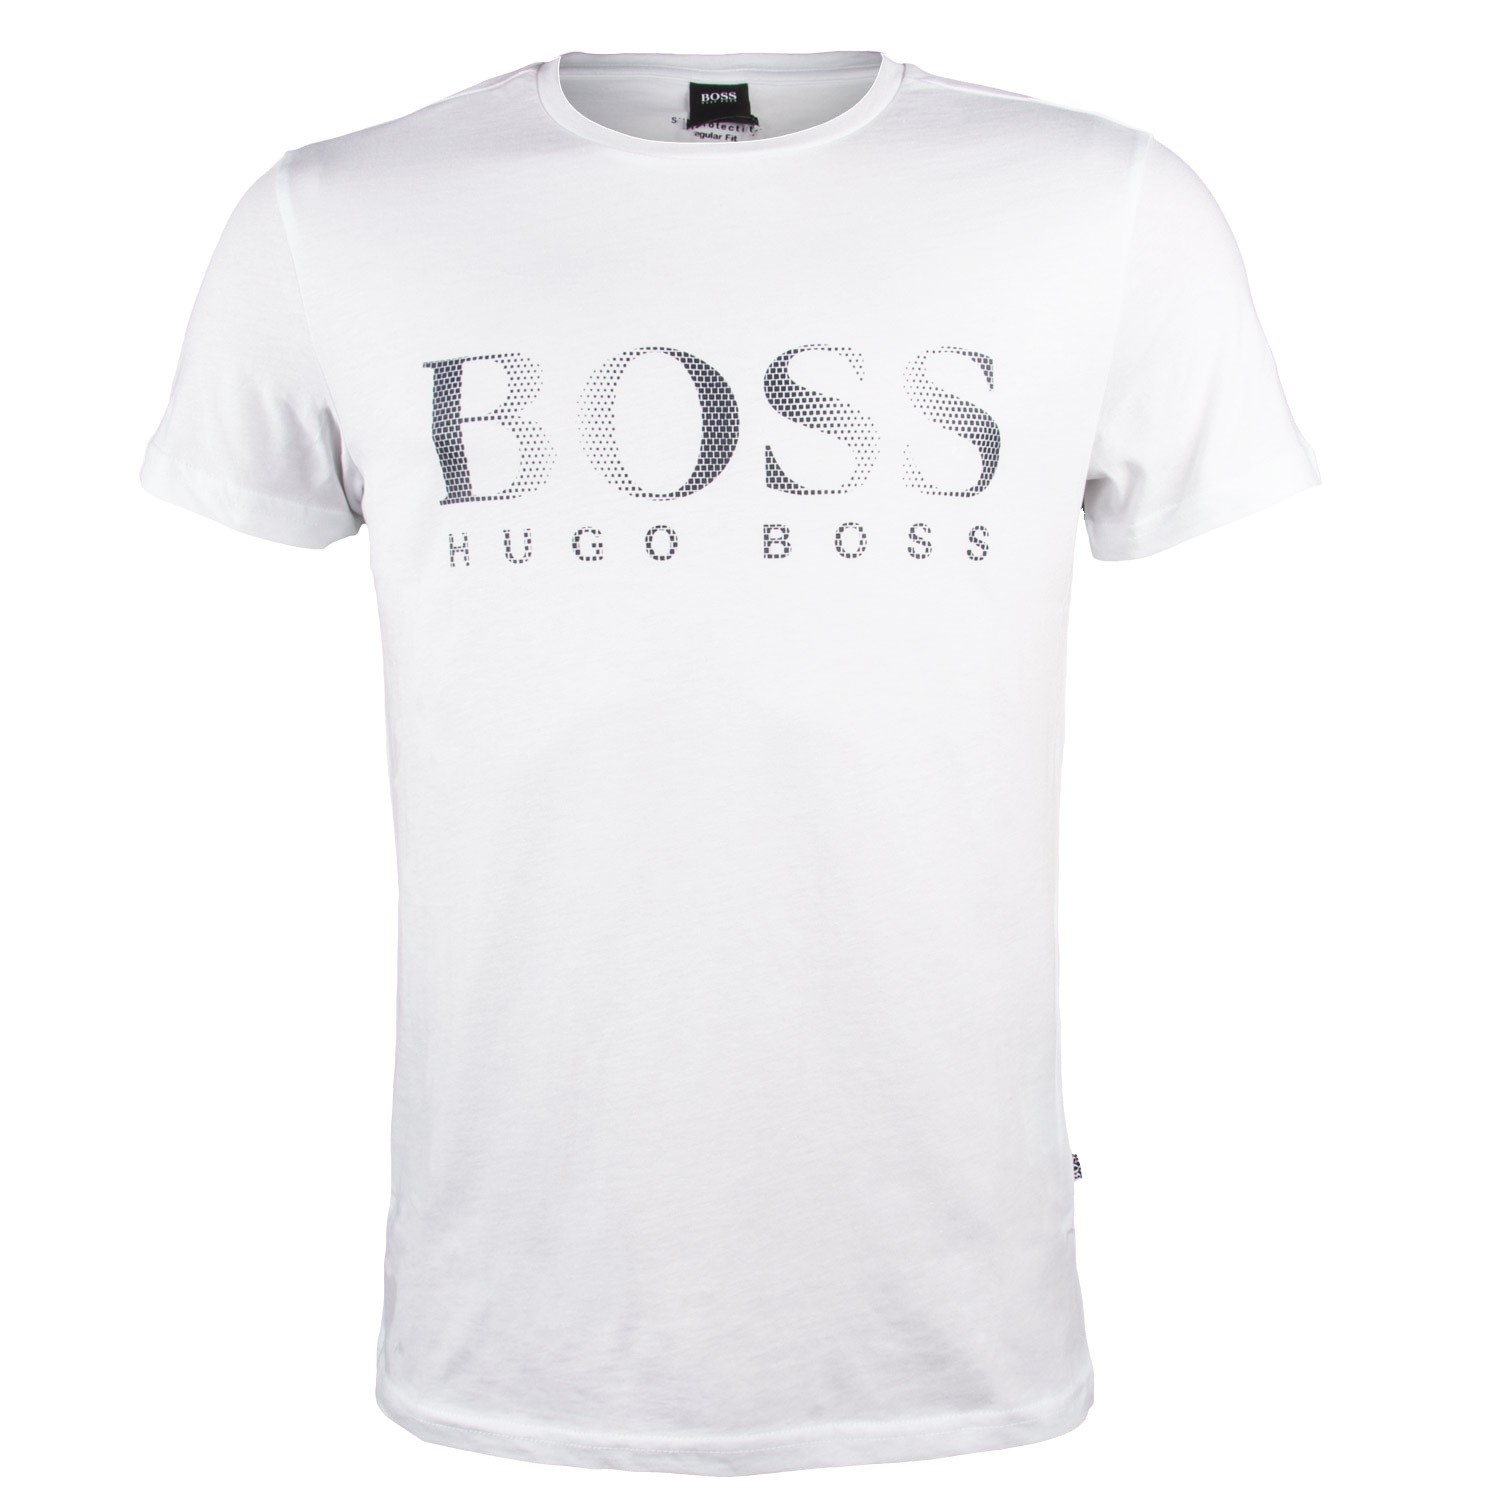 Hugo Boss T-shirt RN UV-Protection - T-shirts - Clothing - Timarco.co.uk